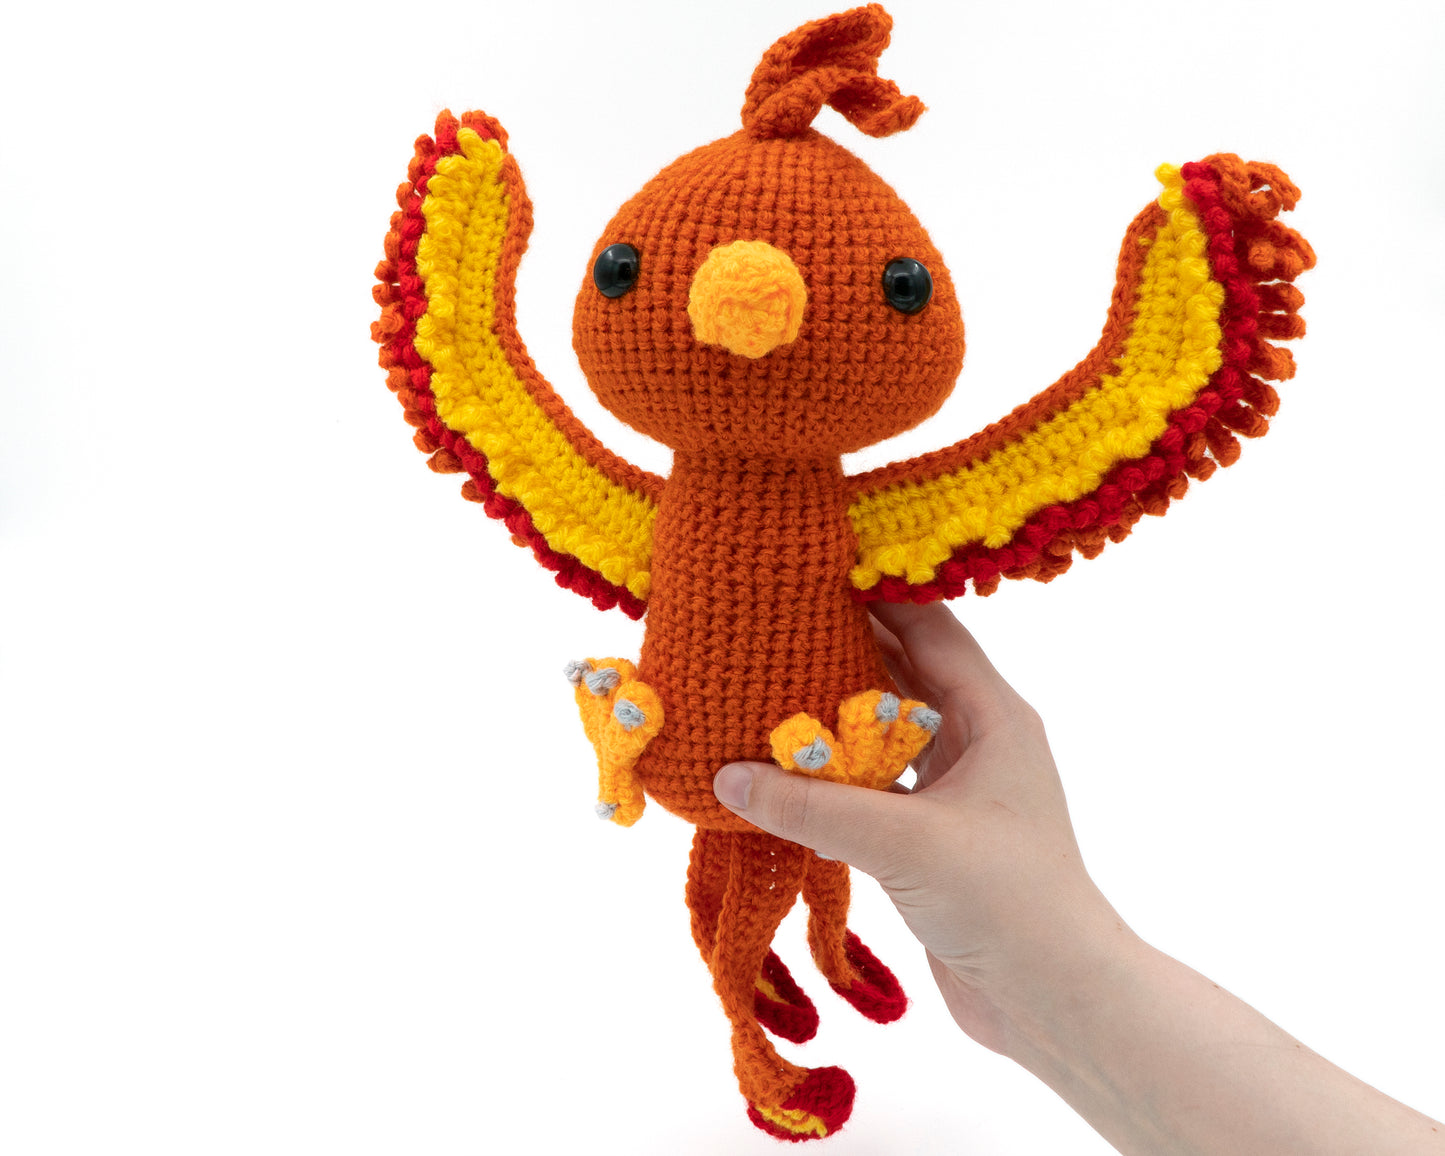 amigurumi crochet phoenix pattern in hand for size comparison